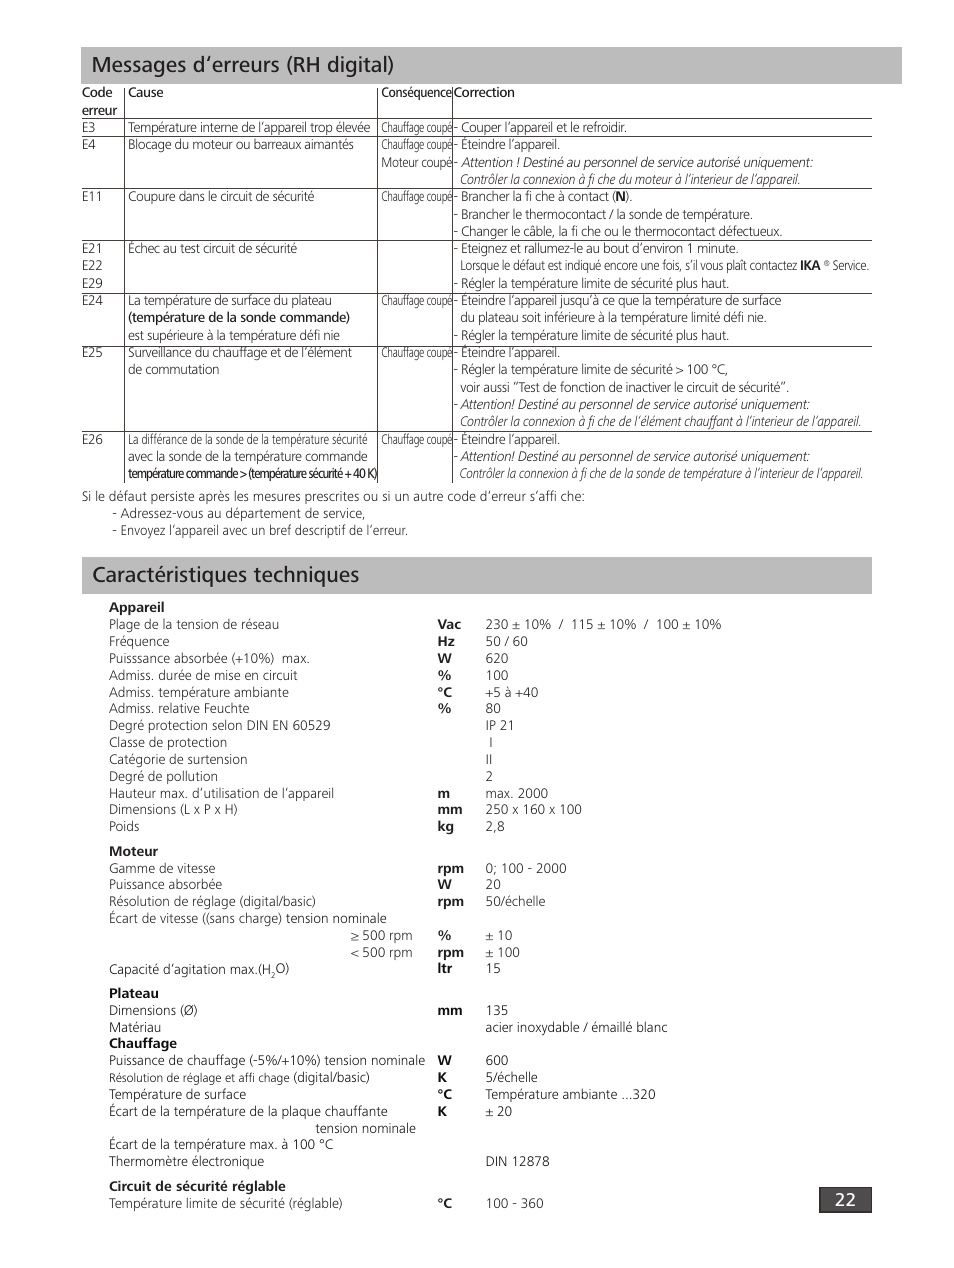 Caractéristiques techniques, Messages d‘erreurs (rh digital) | IKA RH digital User Manual | Page 22 / 52